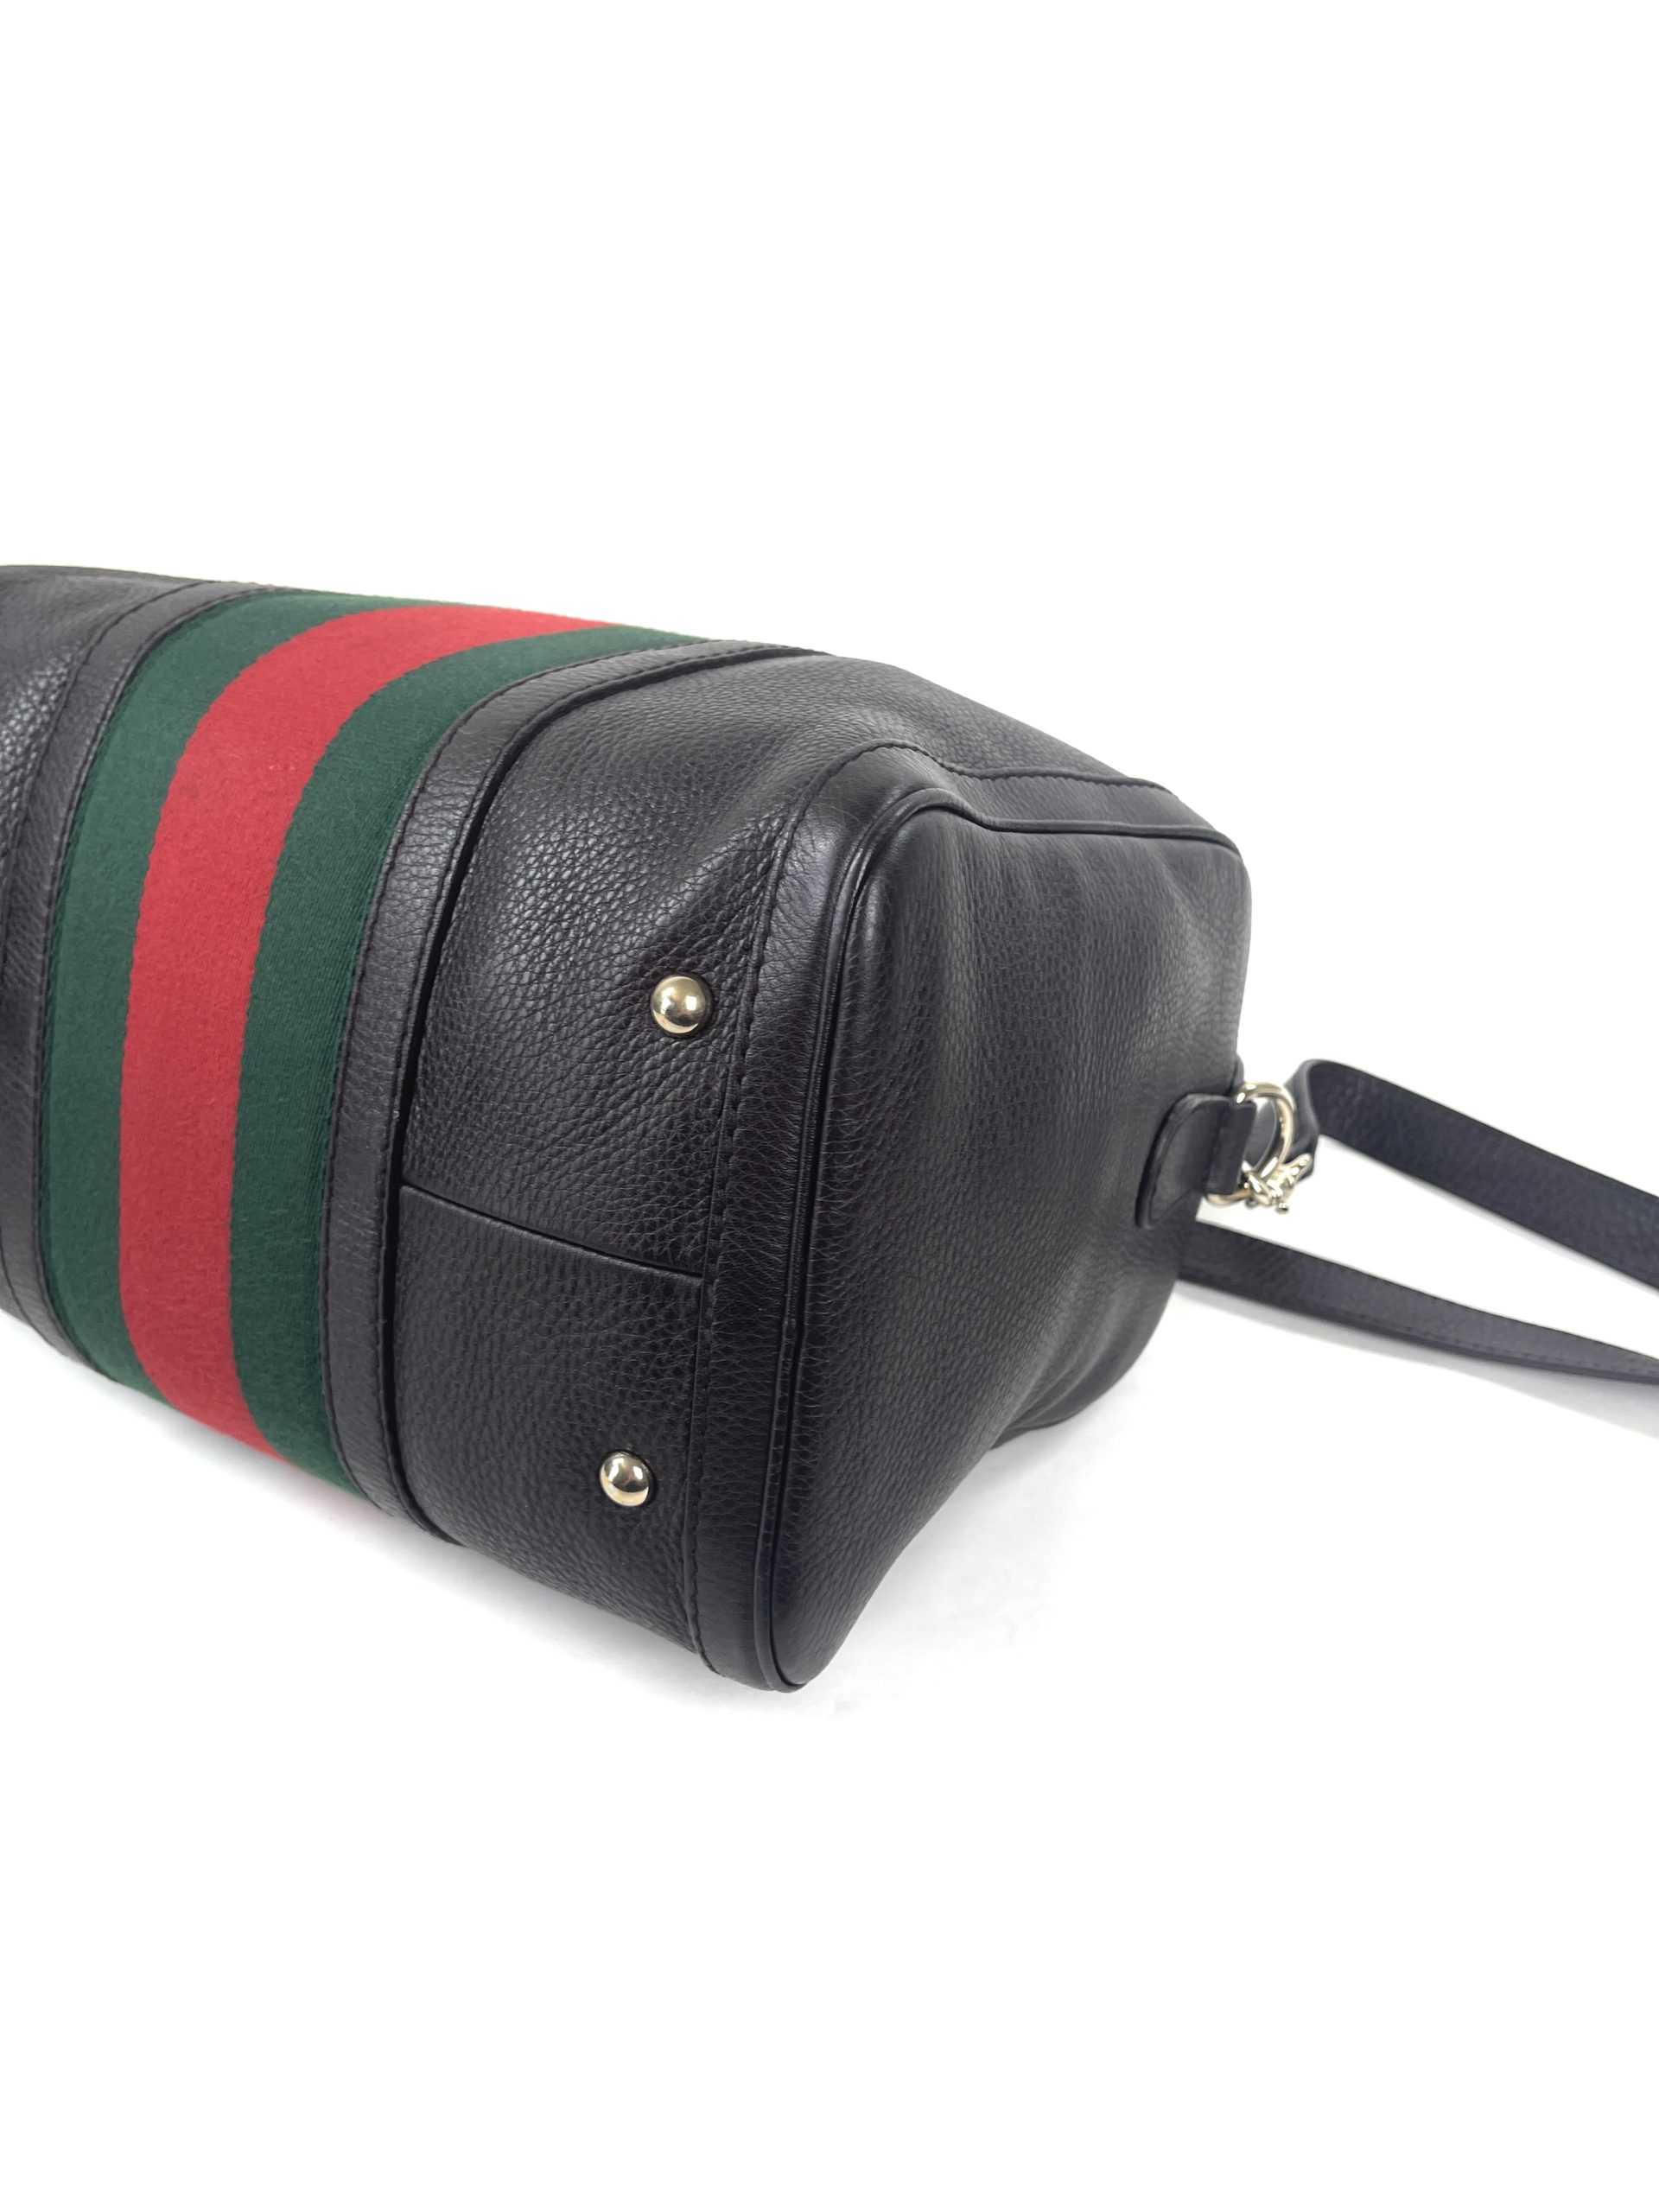 Gucci Joy Dark Brown Leather Web Boston Bag with long strap - A